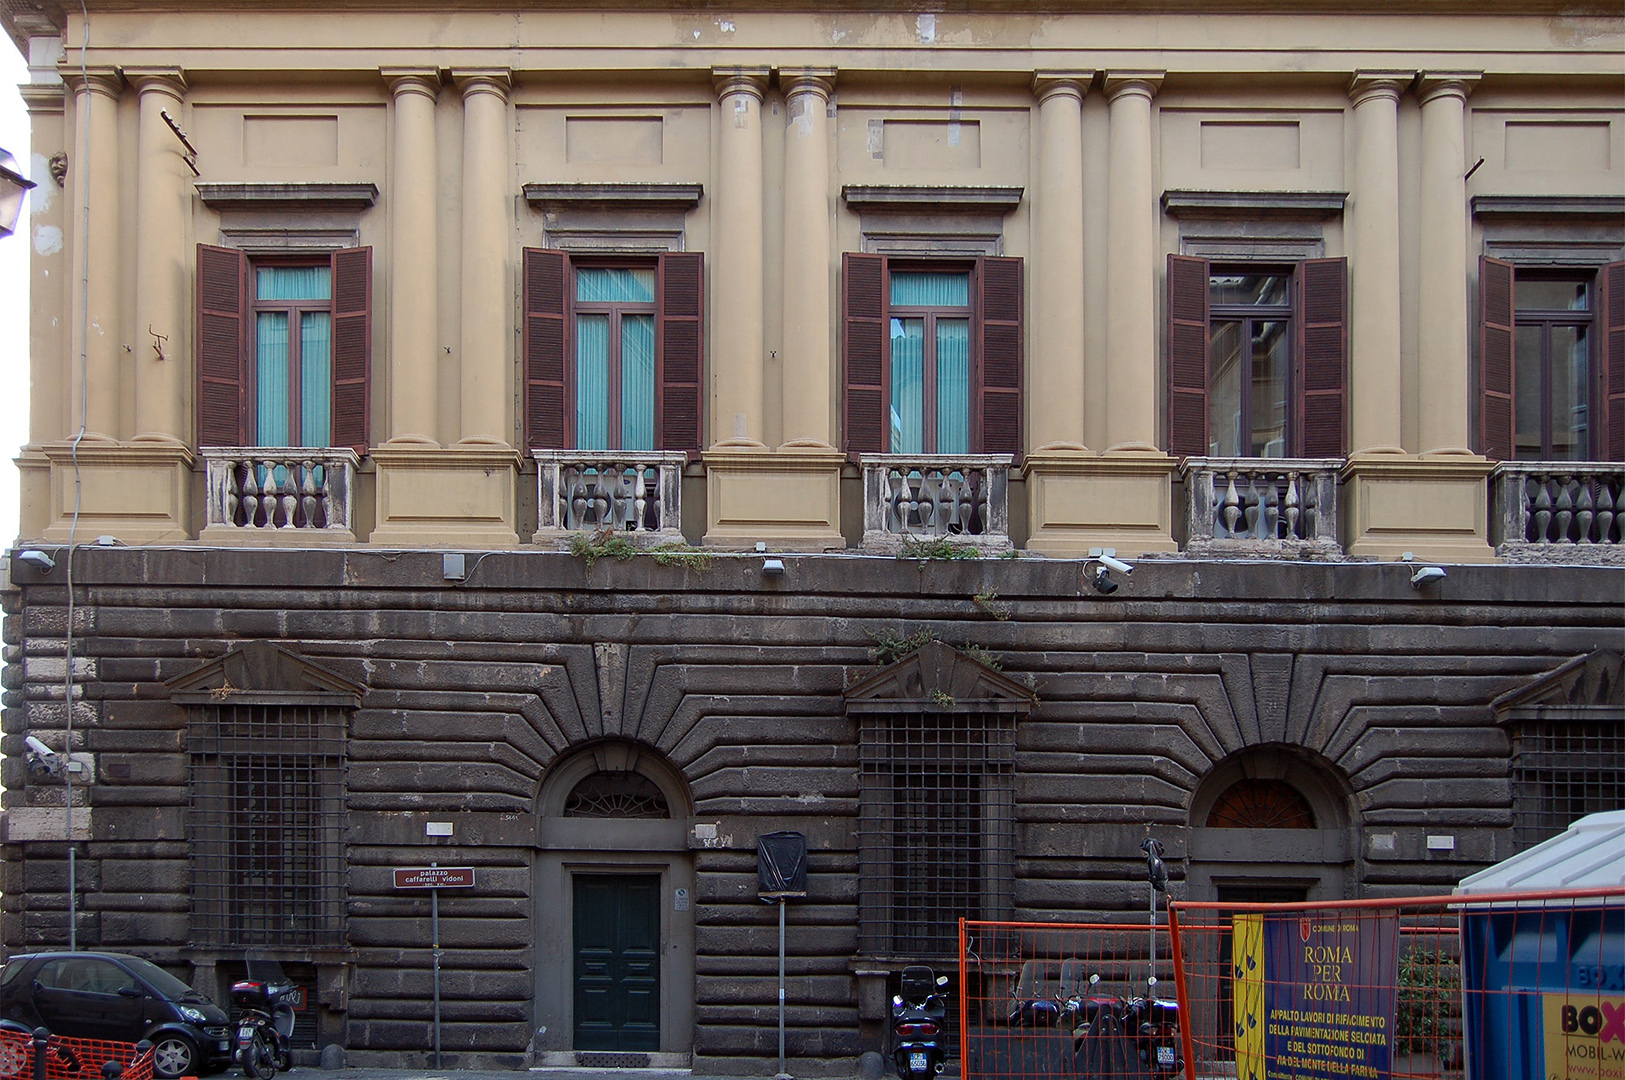 Palazzo Vidoni Caffarelli (Rome, Itali), Palazzo Vidoni Caffarelli (Rome, Italy)